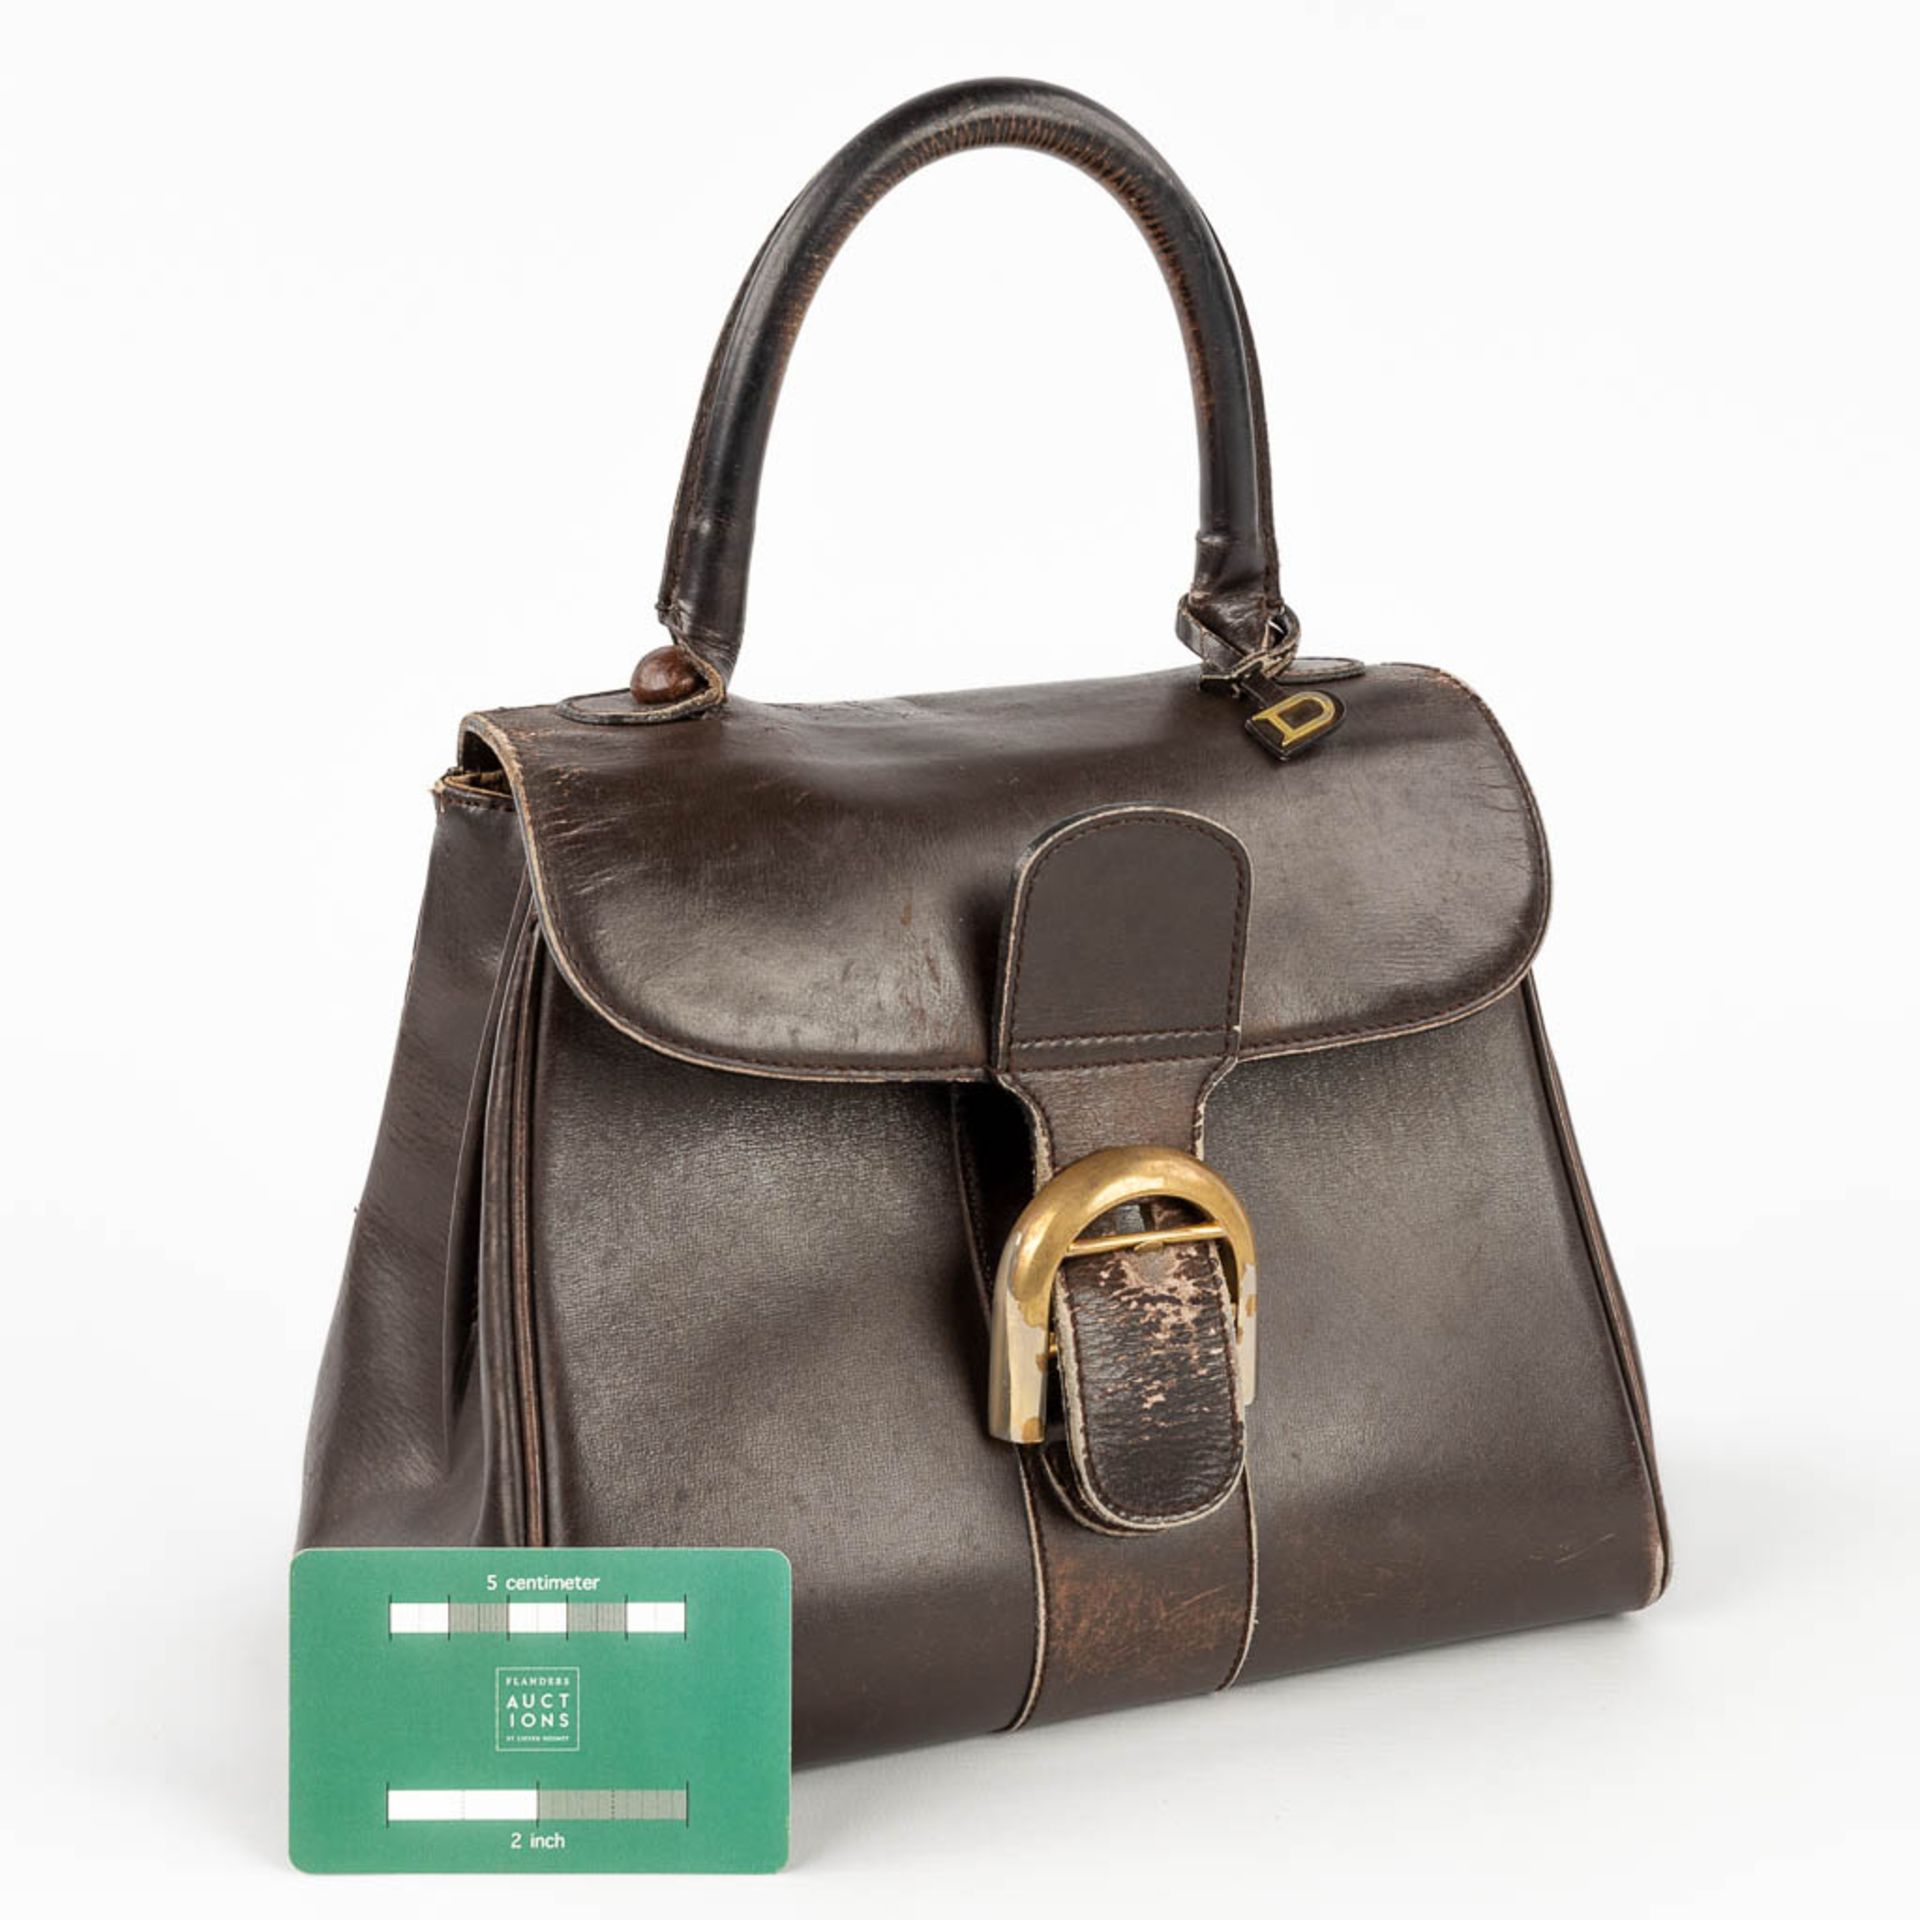 Delvaux Brillant PM, a handbag made of dark brown leather. Circa 1950. (W: 26 x H: 30 cm) - Image 2 of 19